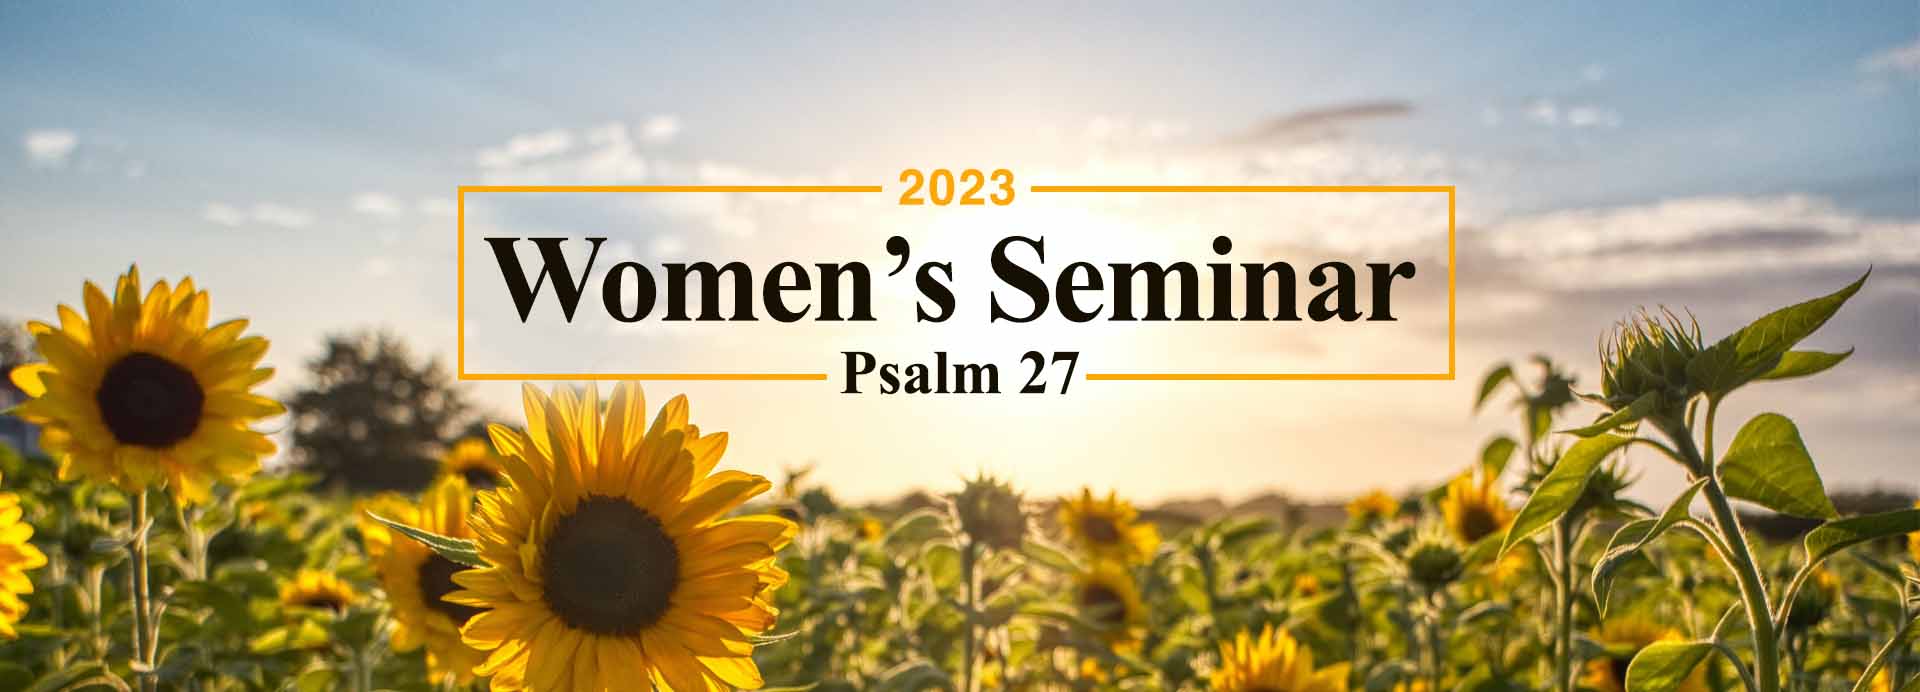 Women's Seminar 2023